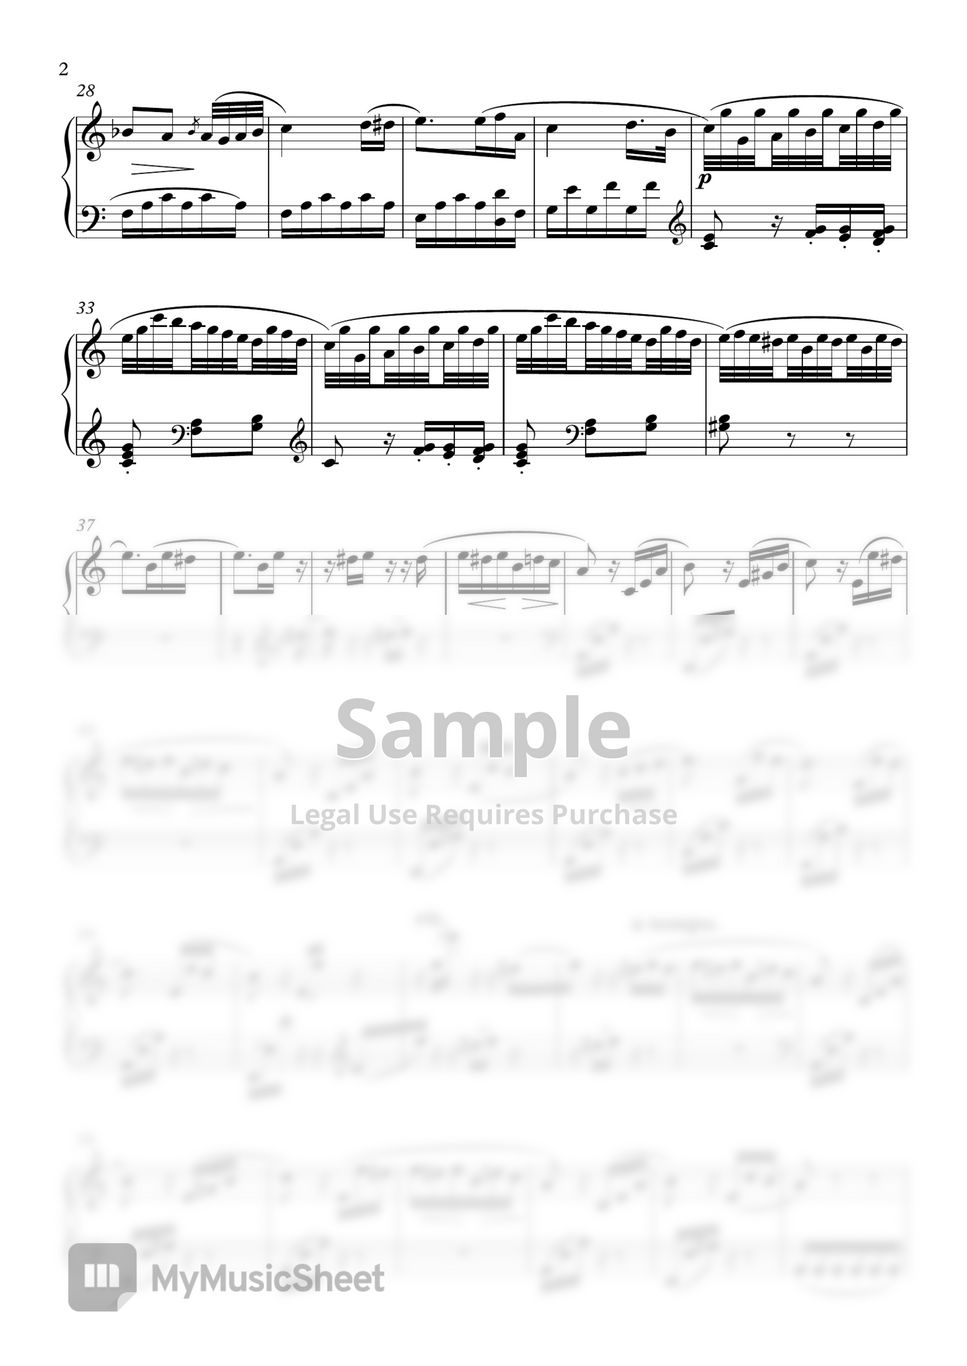 Beethoven - Für Elise by PianoGenius